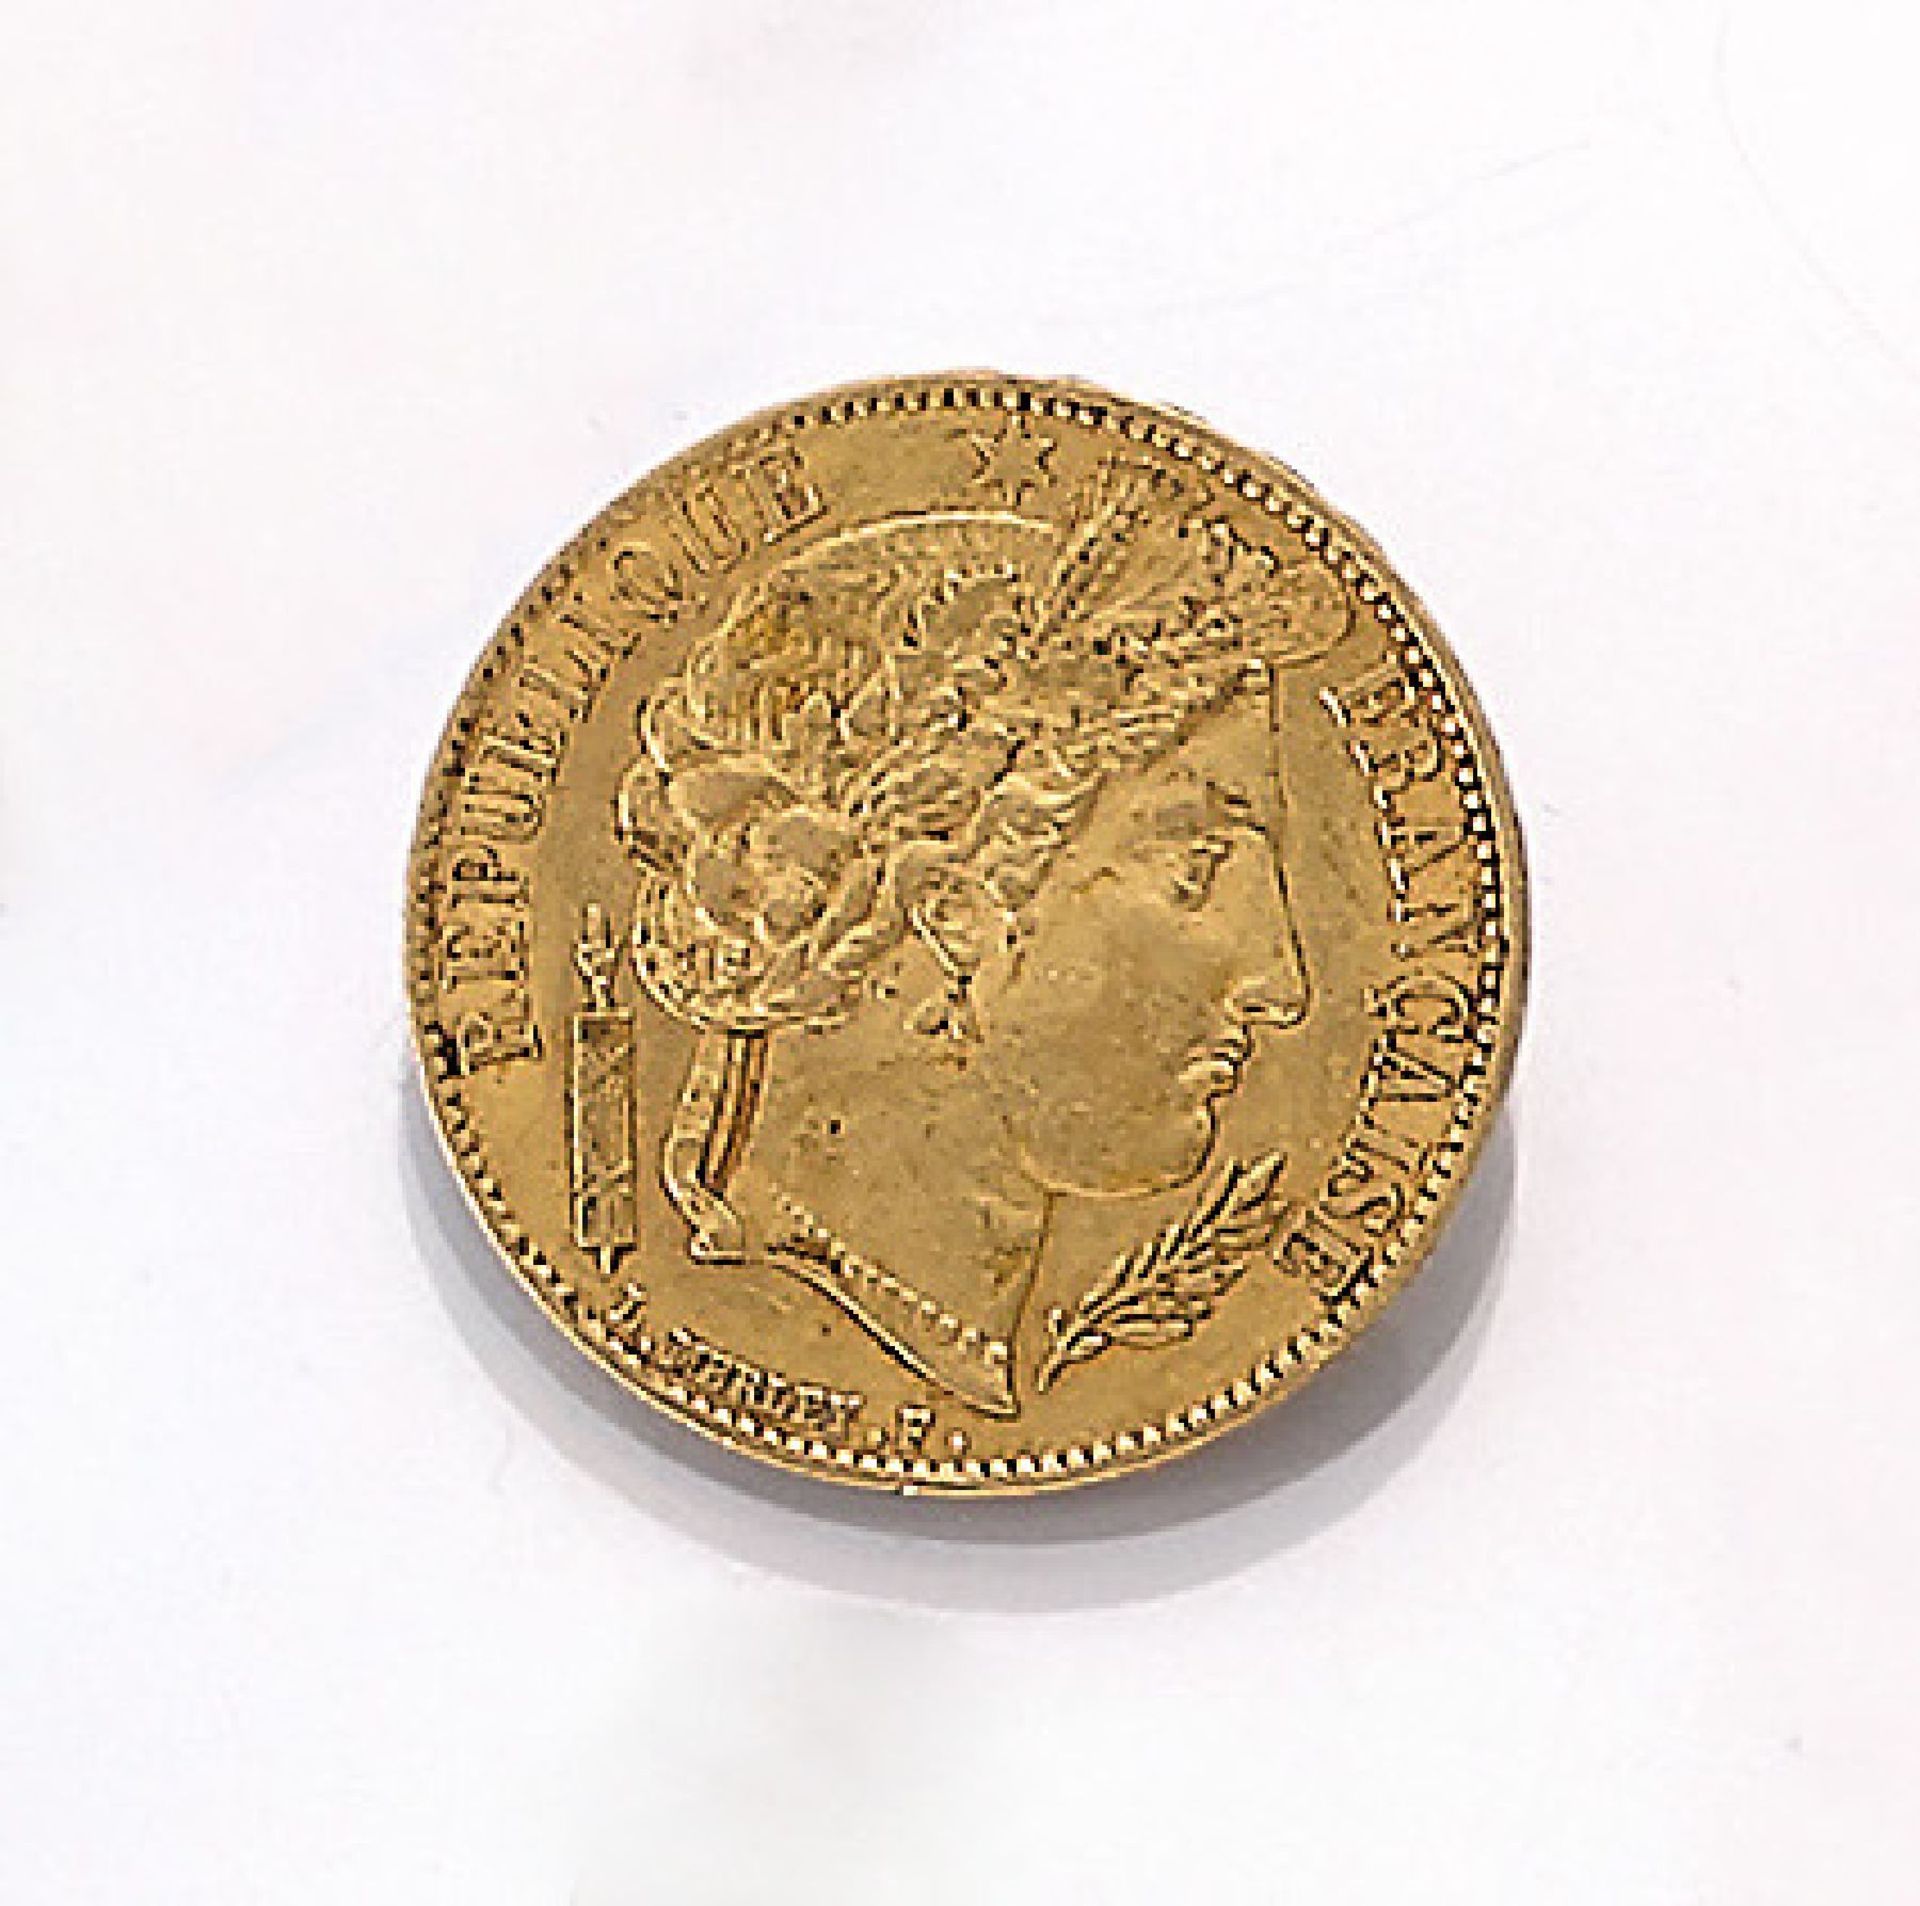 Goldmünze, 20 Francs, Frankreich, 1850, Liberté, Égalité, Fraternité, Cereskopf, Prägemarke AGold